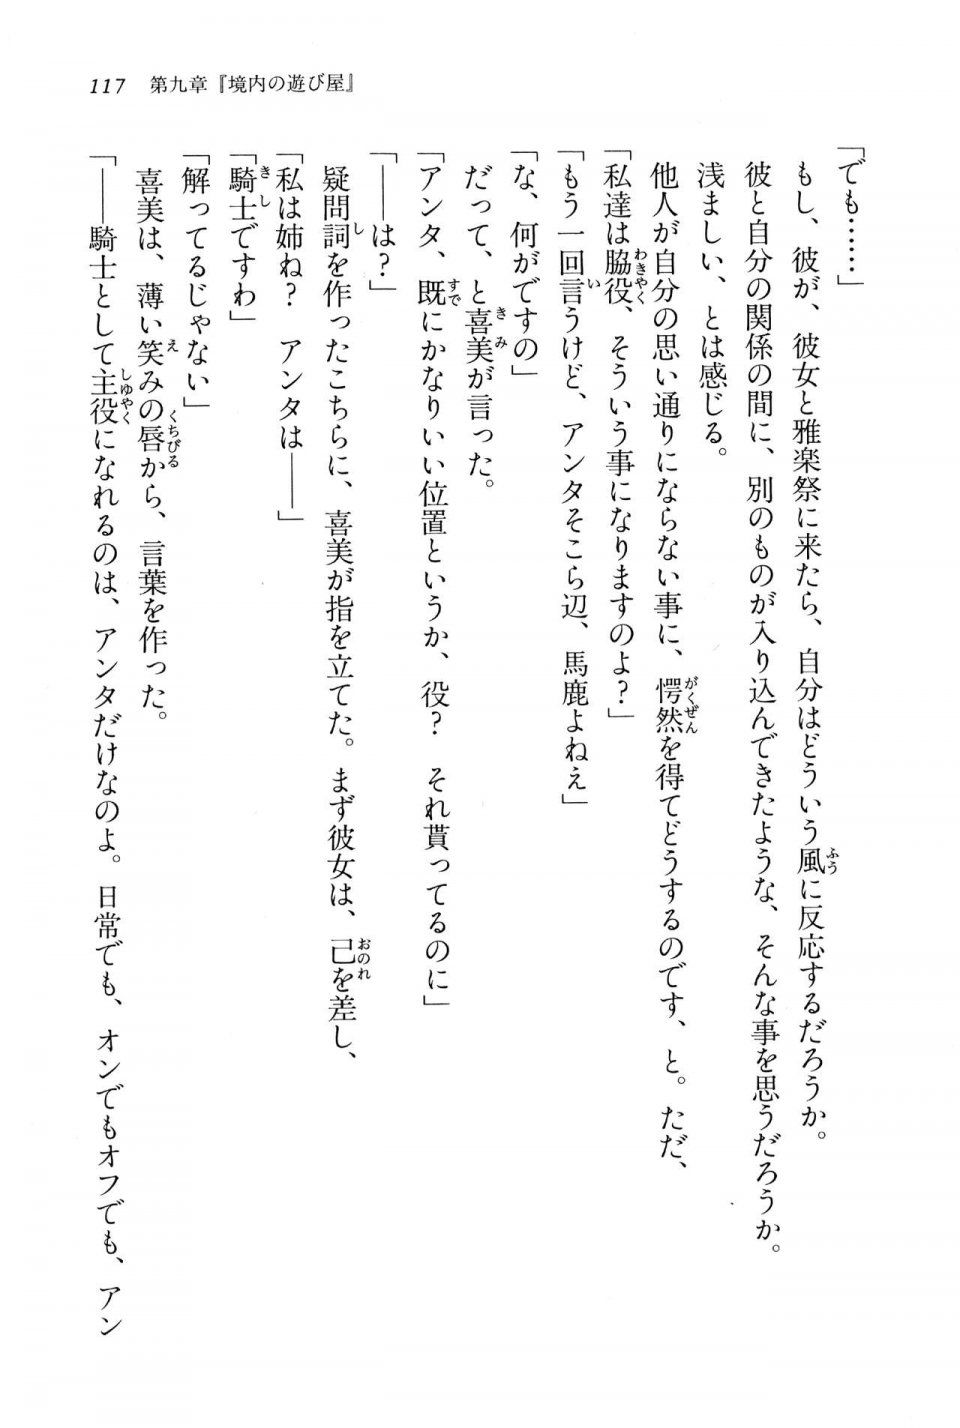 Kyoukai Senjou no Horizon BD Special Mininovel Vol 6(3B) - Photo #121